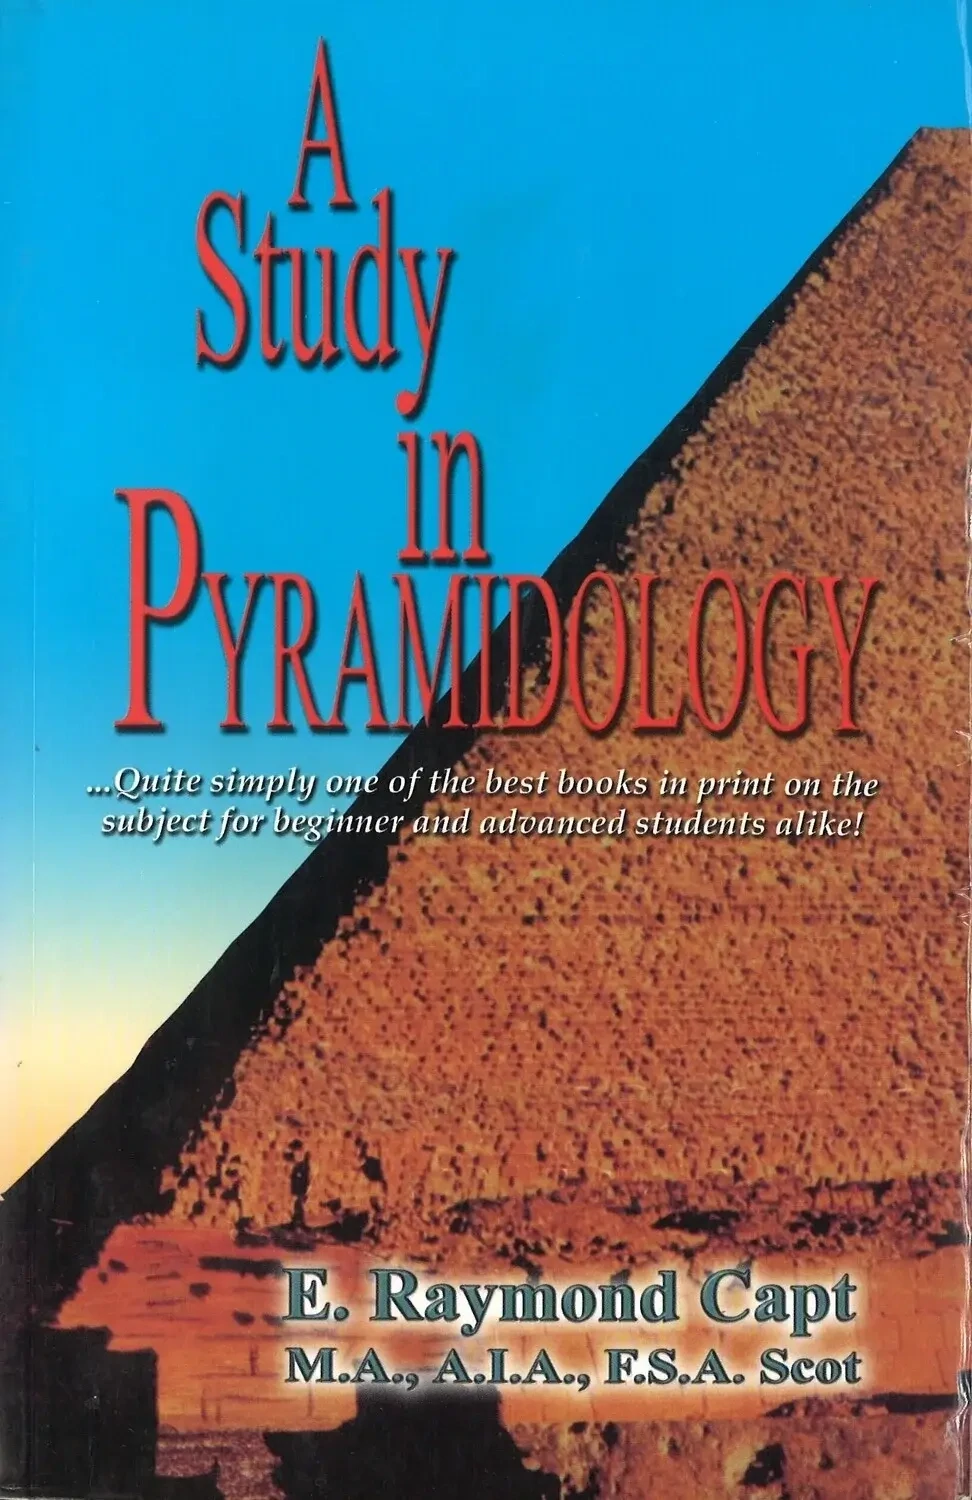 A Study in Pyramidology by E. Raymond Capt